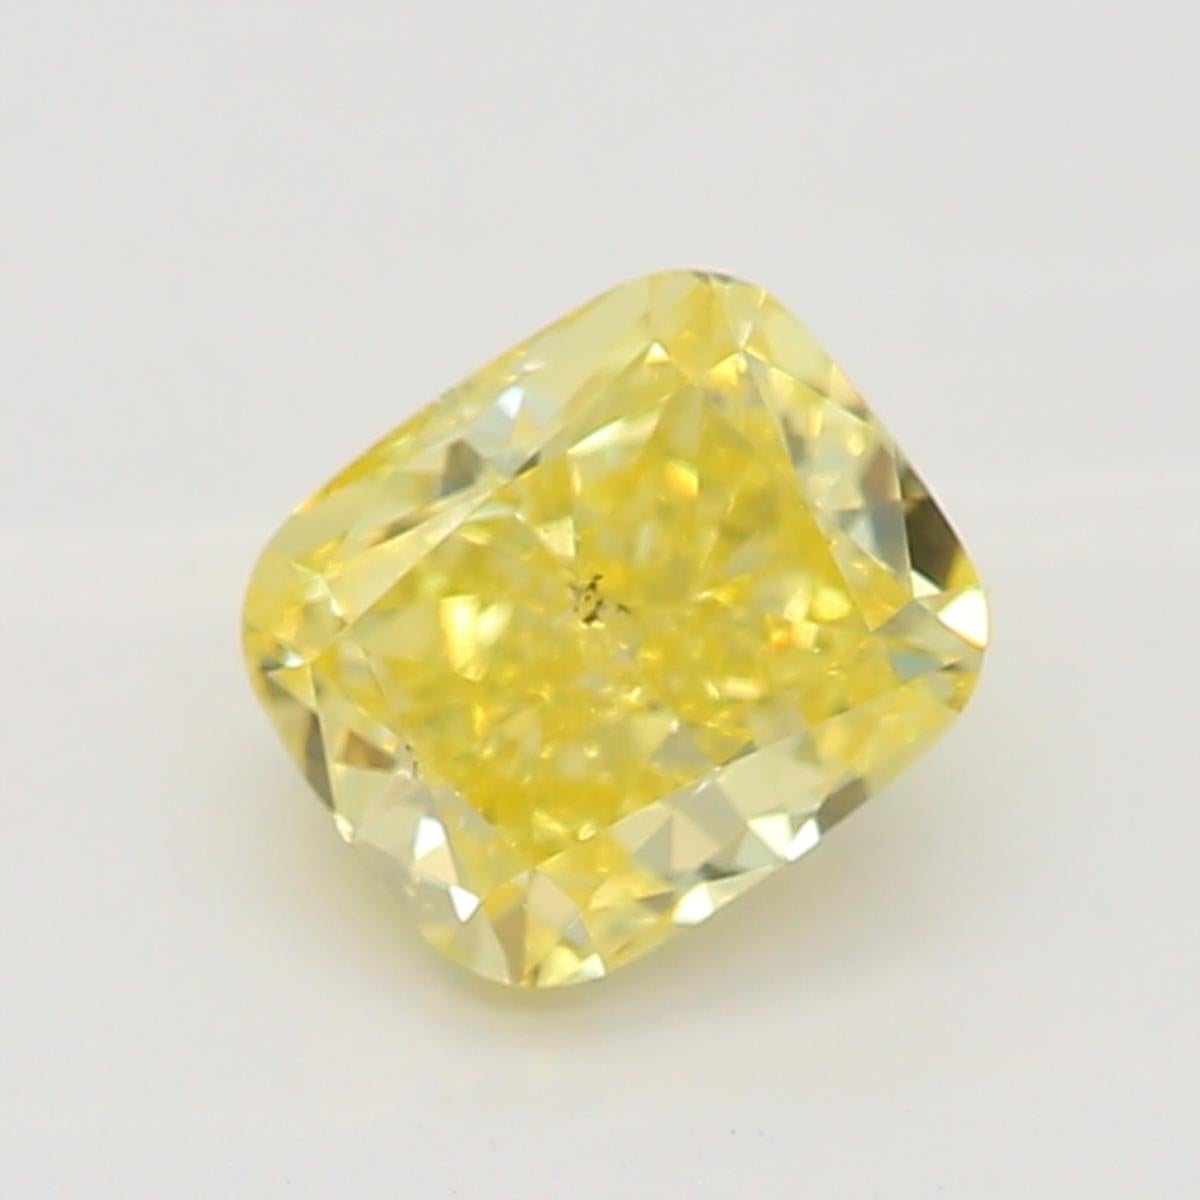 0.41 Carat Fancy Intense Yellow Cushion Cut Diamond SI1 Clarity GIA Certified For Sale 2